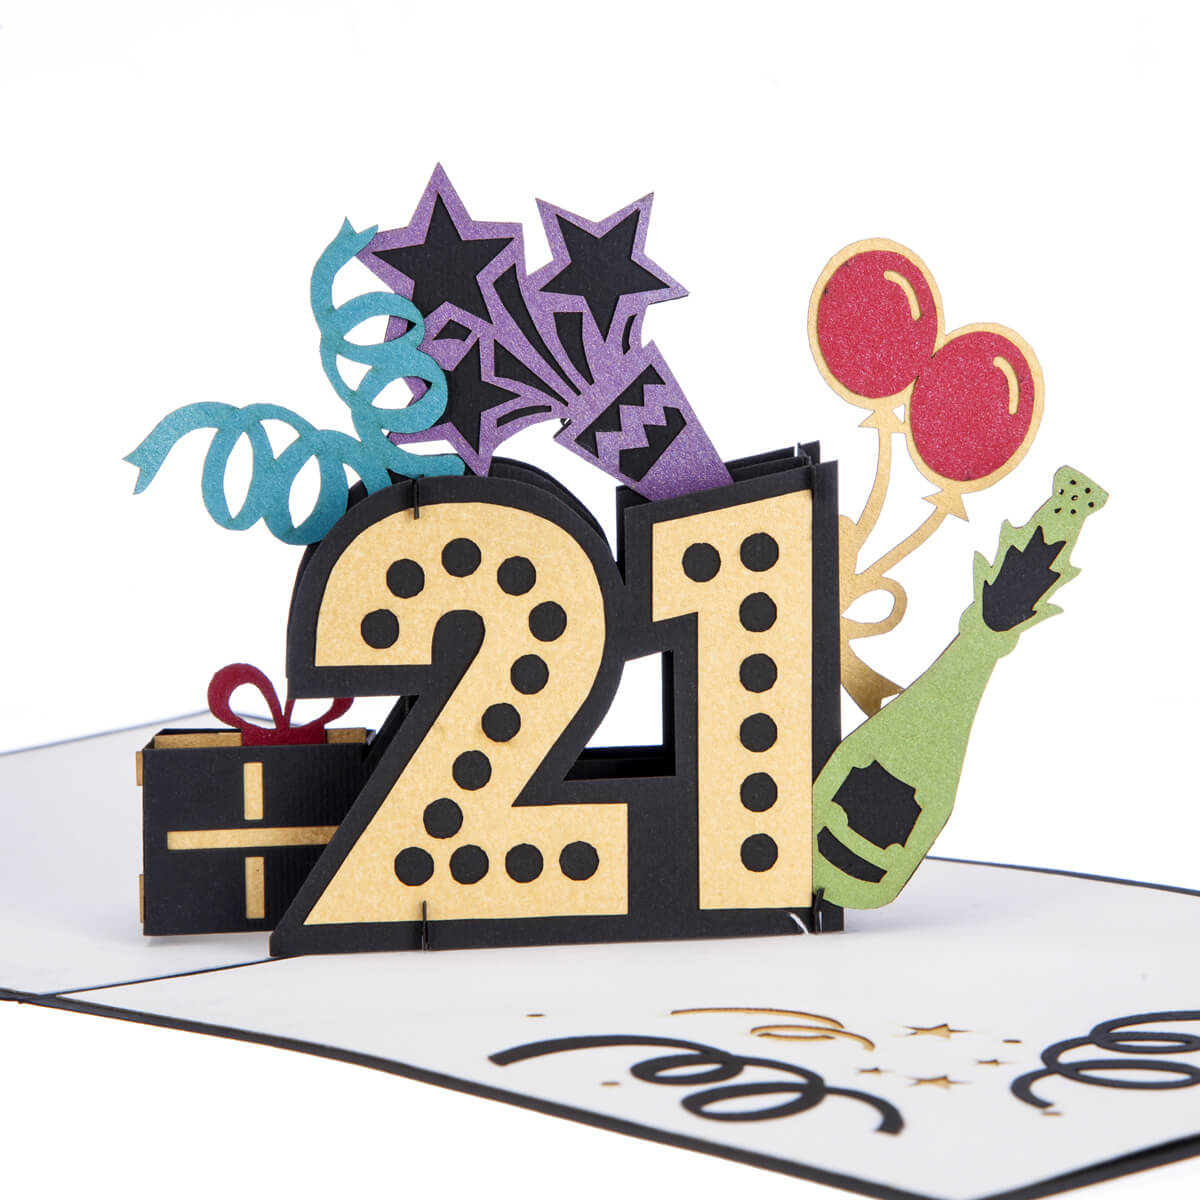 Adulting Begin 21st Pop-Up Birthday Greeting Card Blank Inside